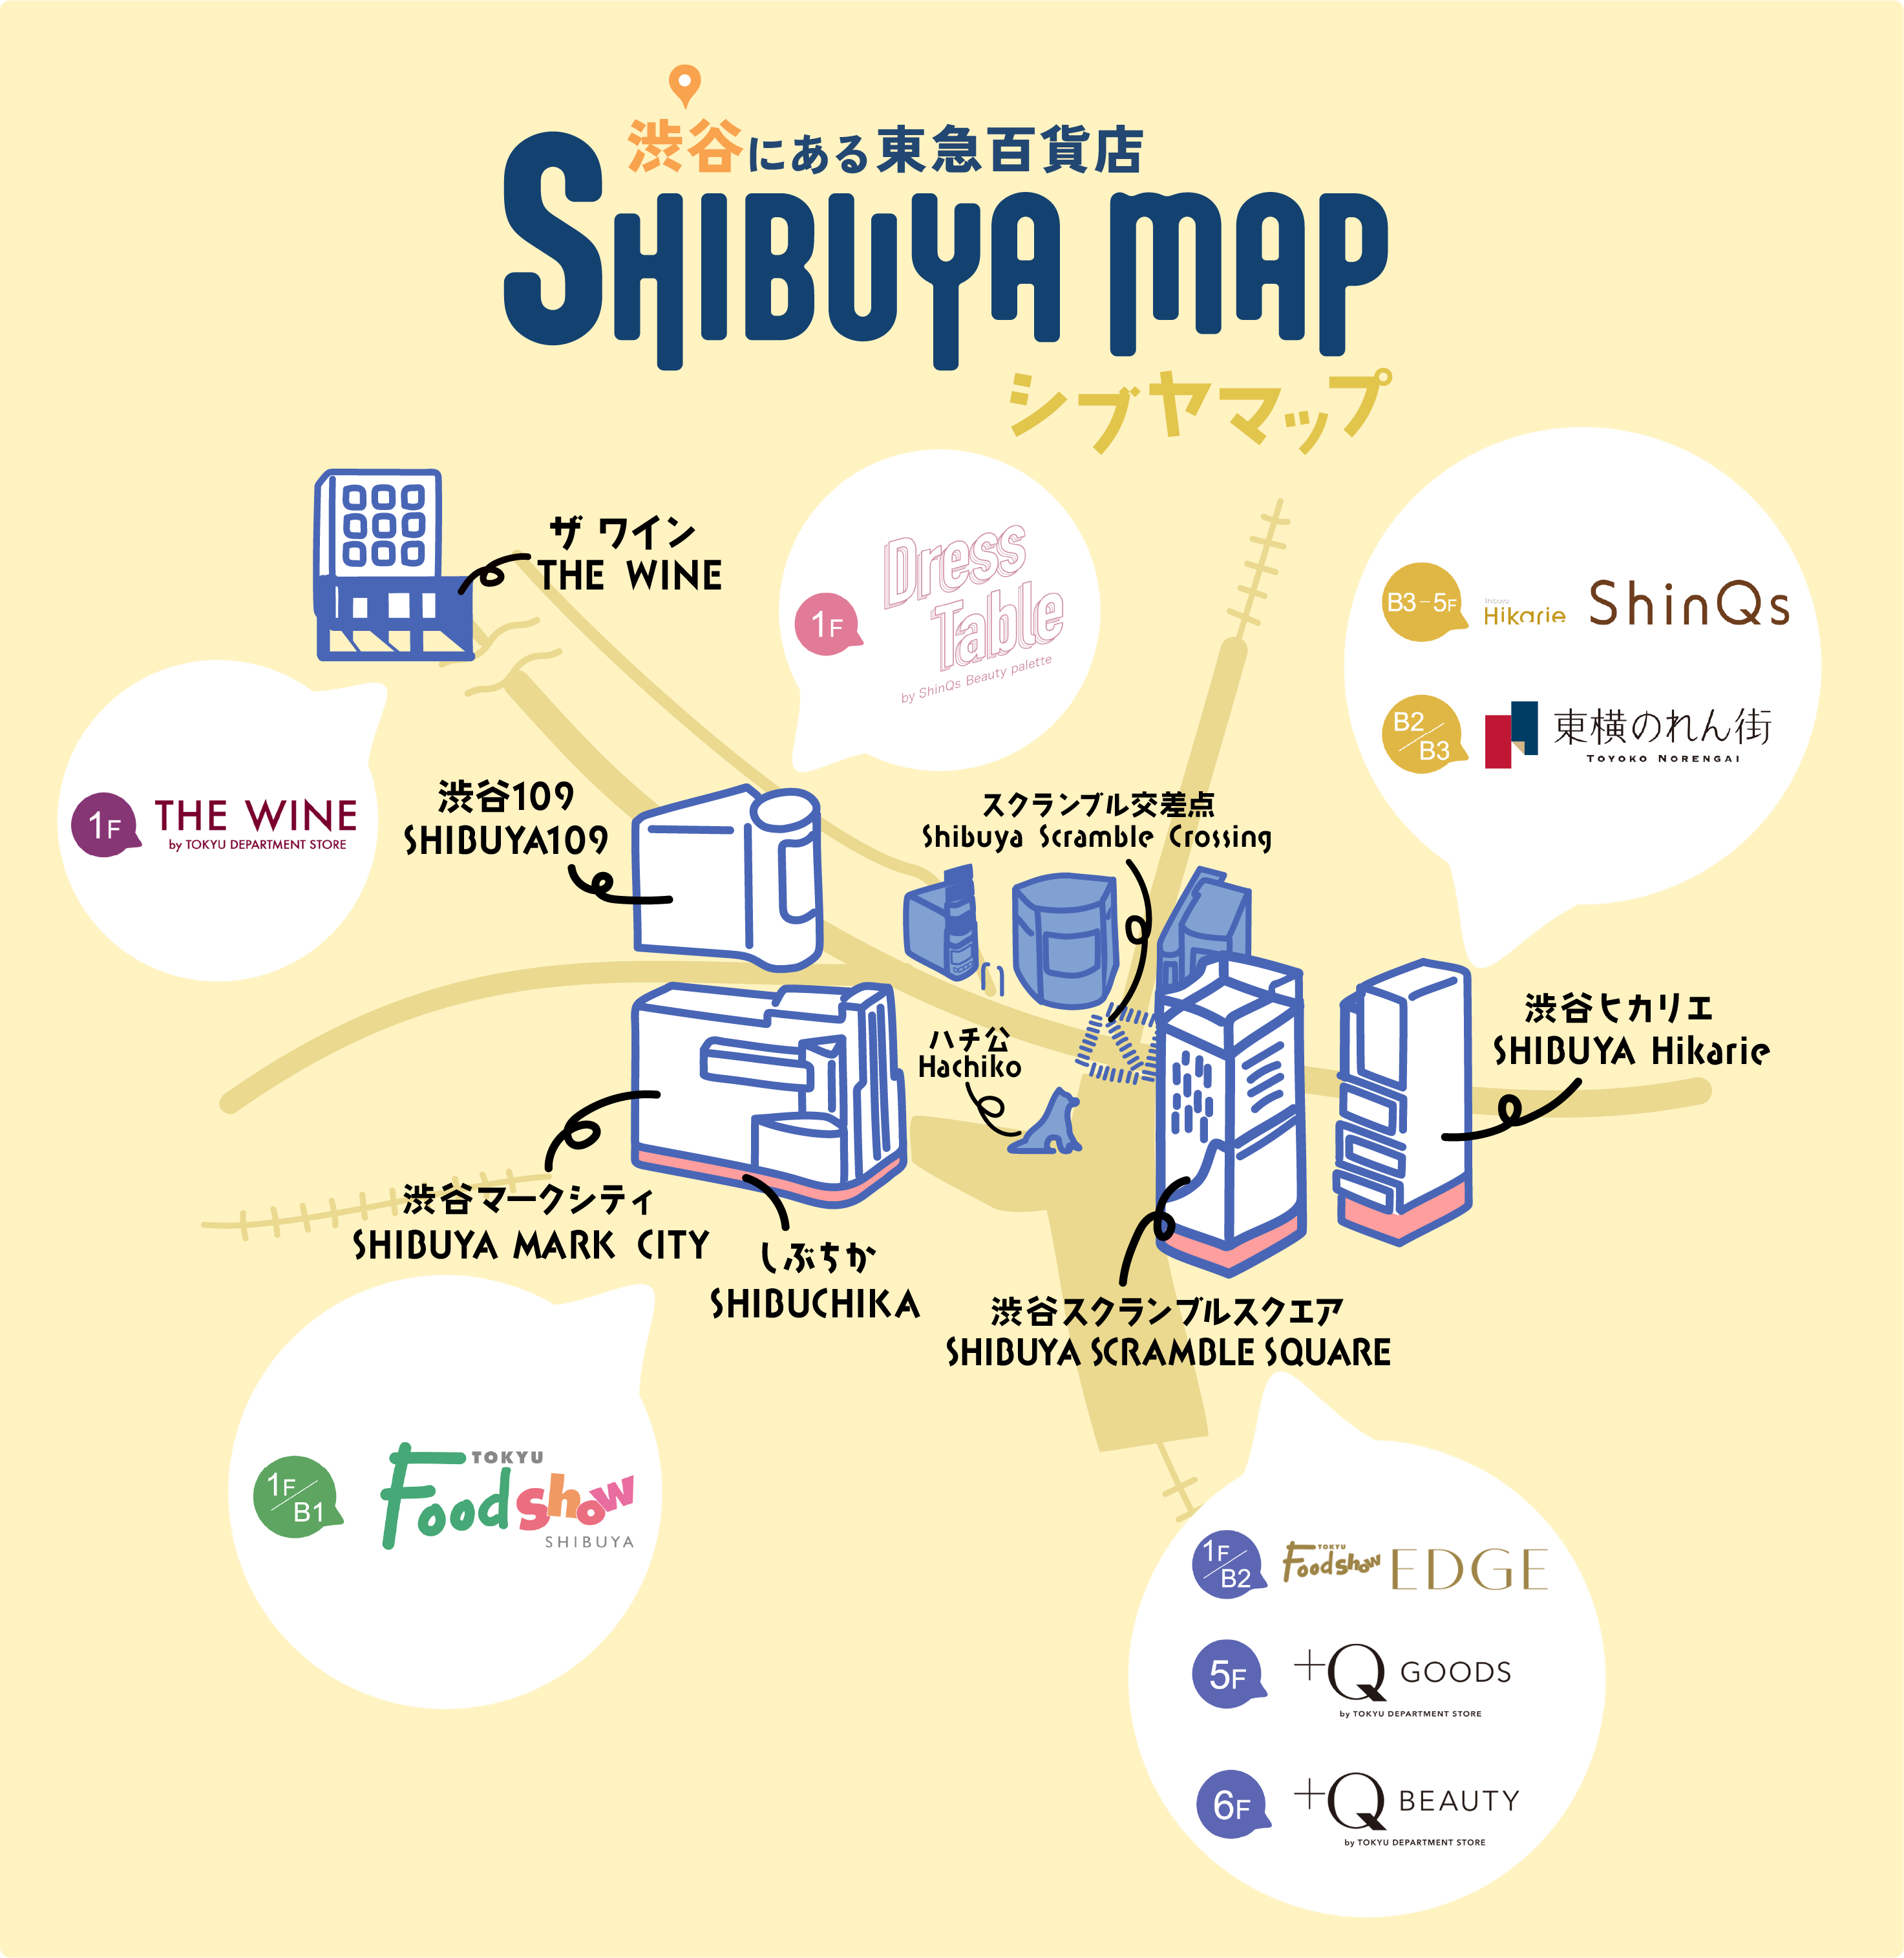 TOKYU DEPARTMENT STORE BEAUTY
「SHIBUYA BEAUTY JAM」
好奇心を刺激する10日間のイベントを開催